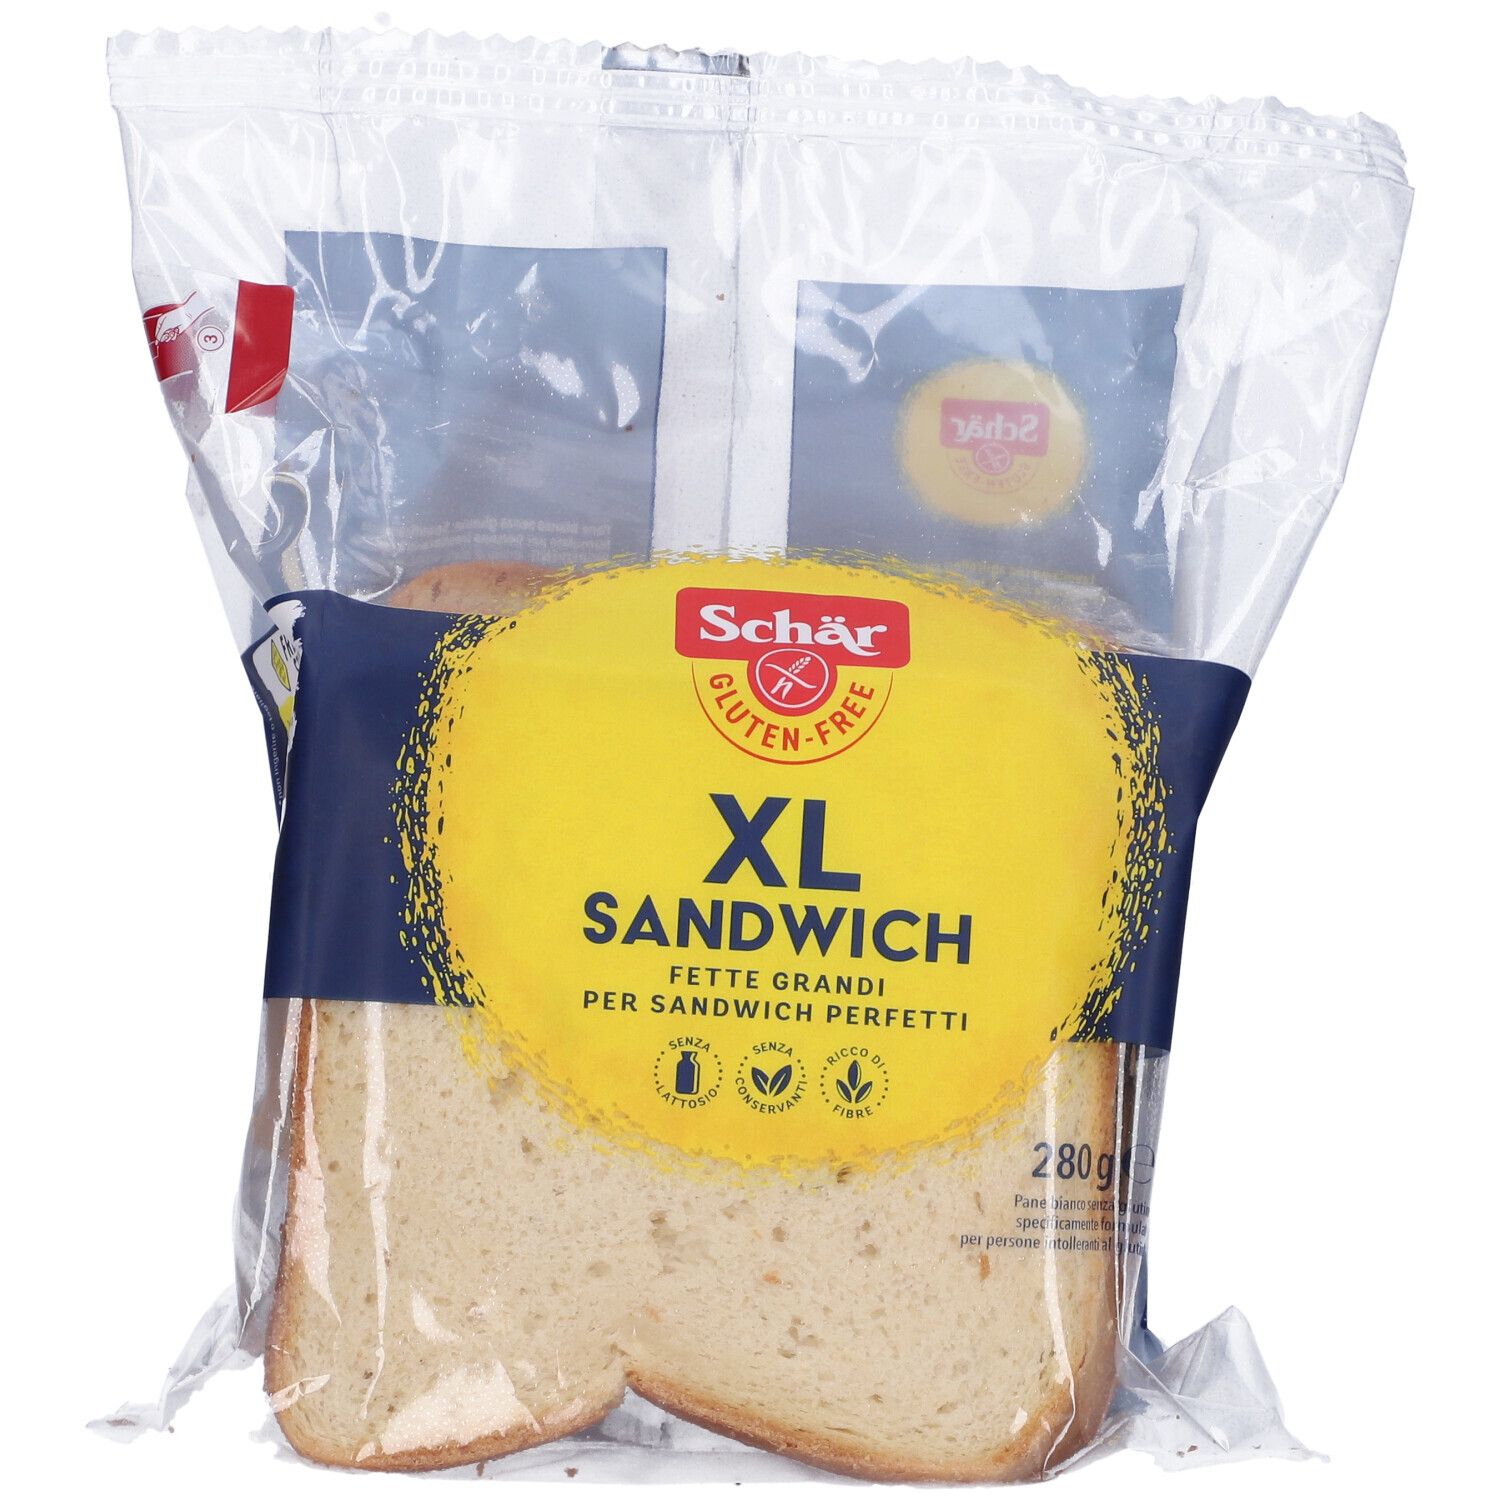 Schär XL Sandwich